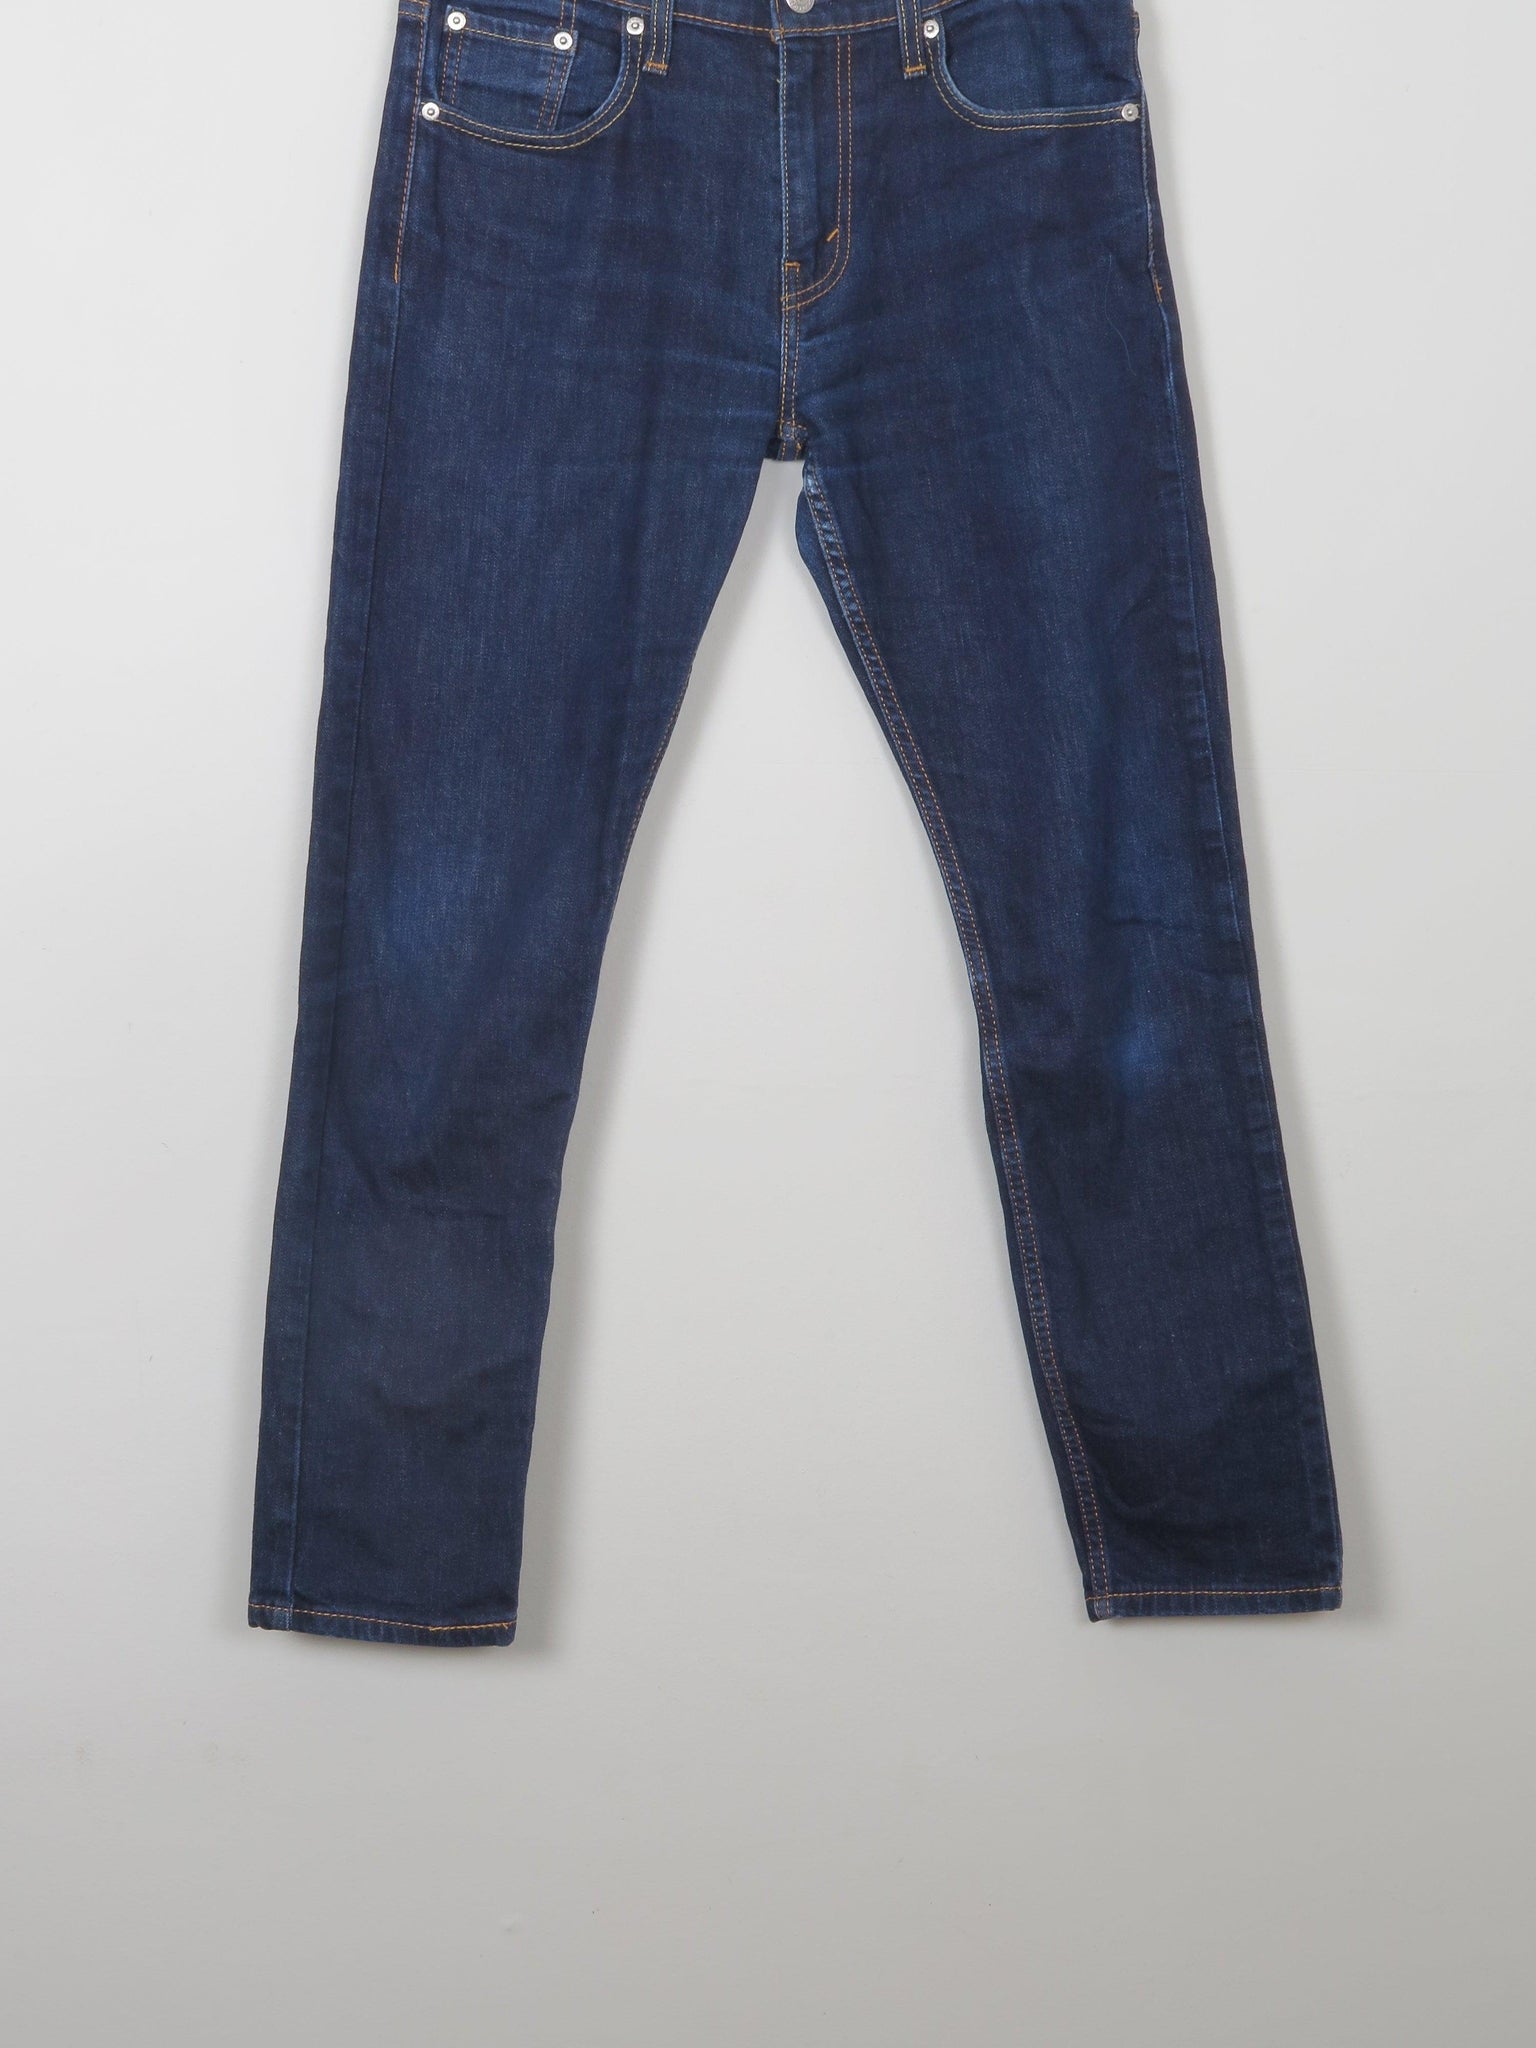 Men's Levi's Blue Stretch Jeans 30/30 512 - The Harlequin